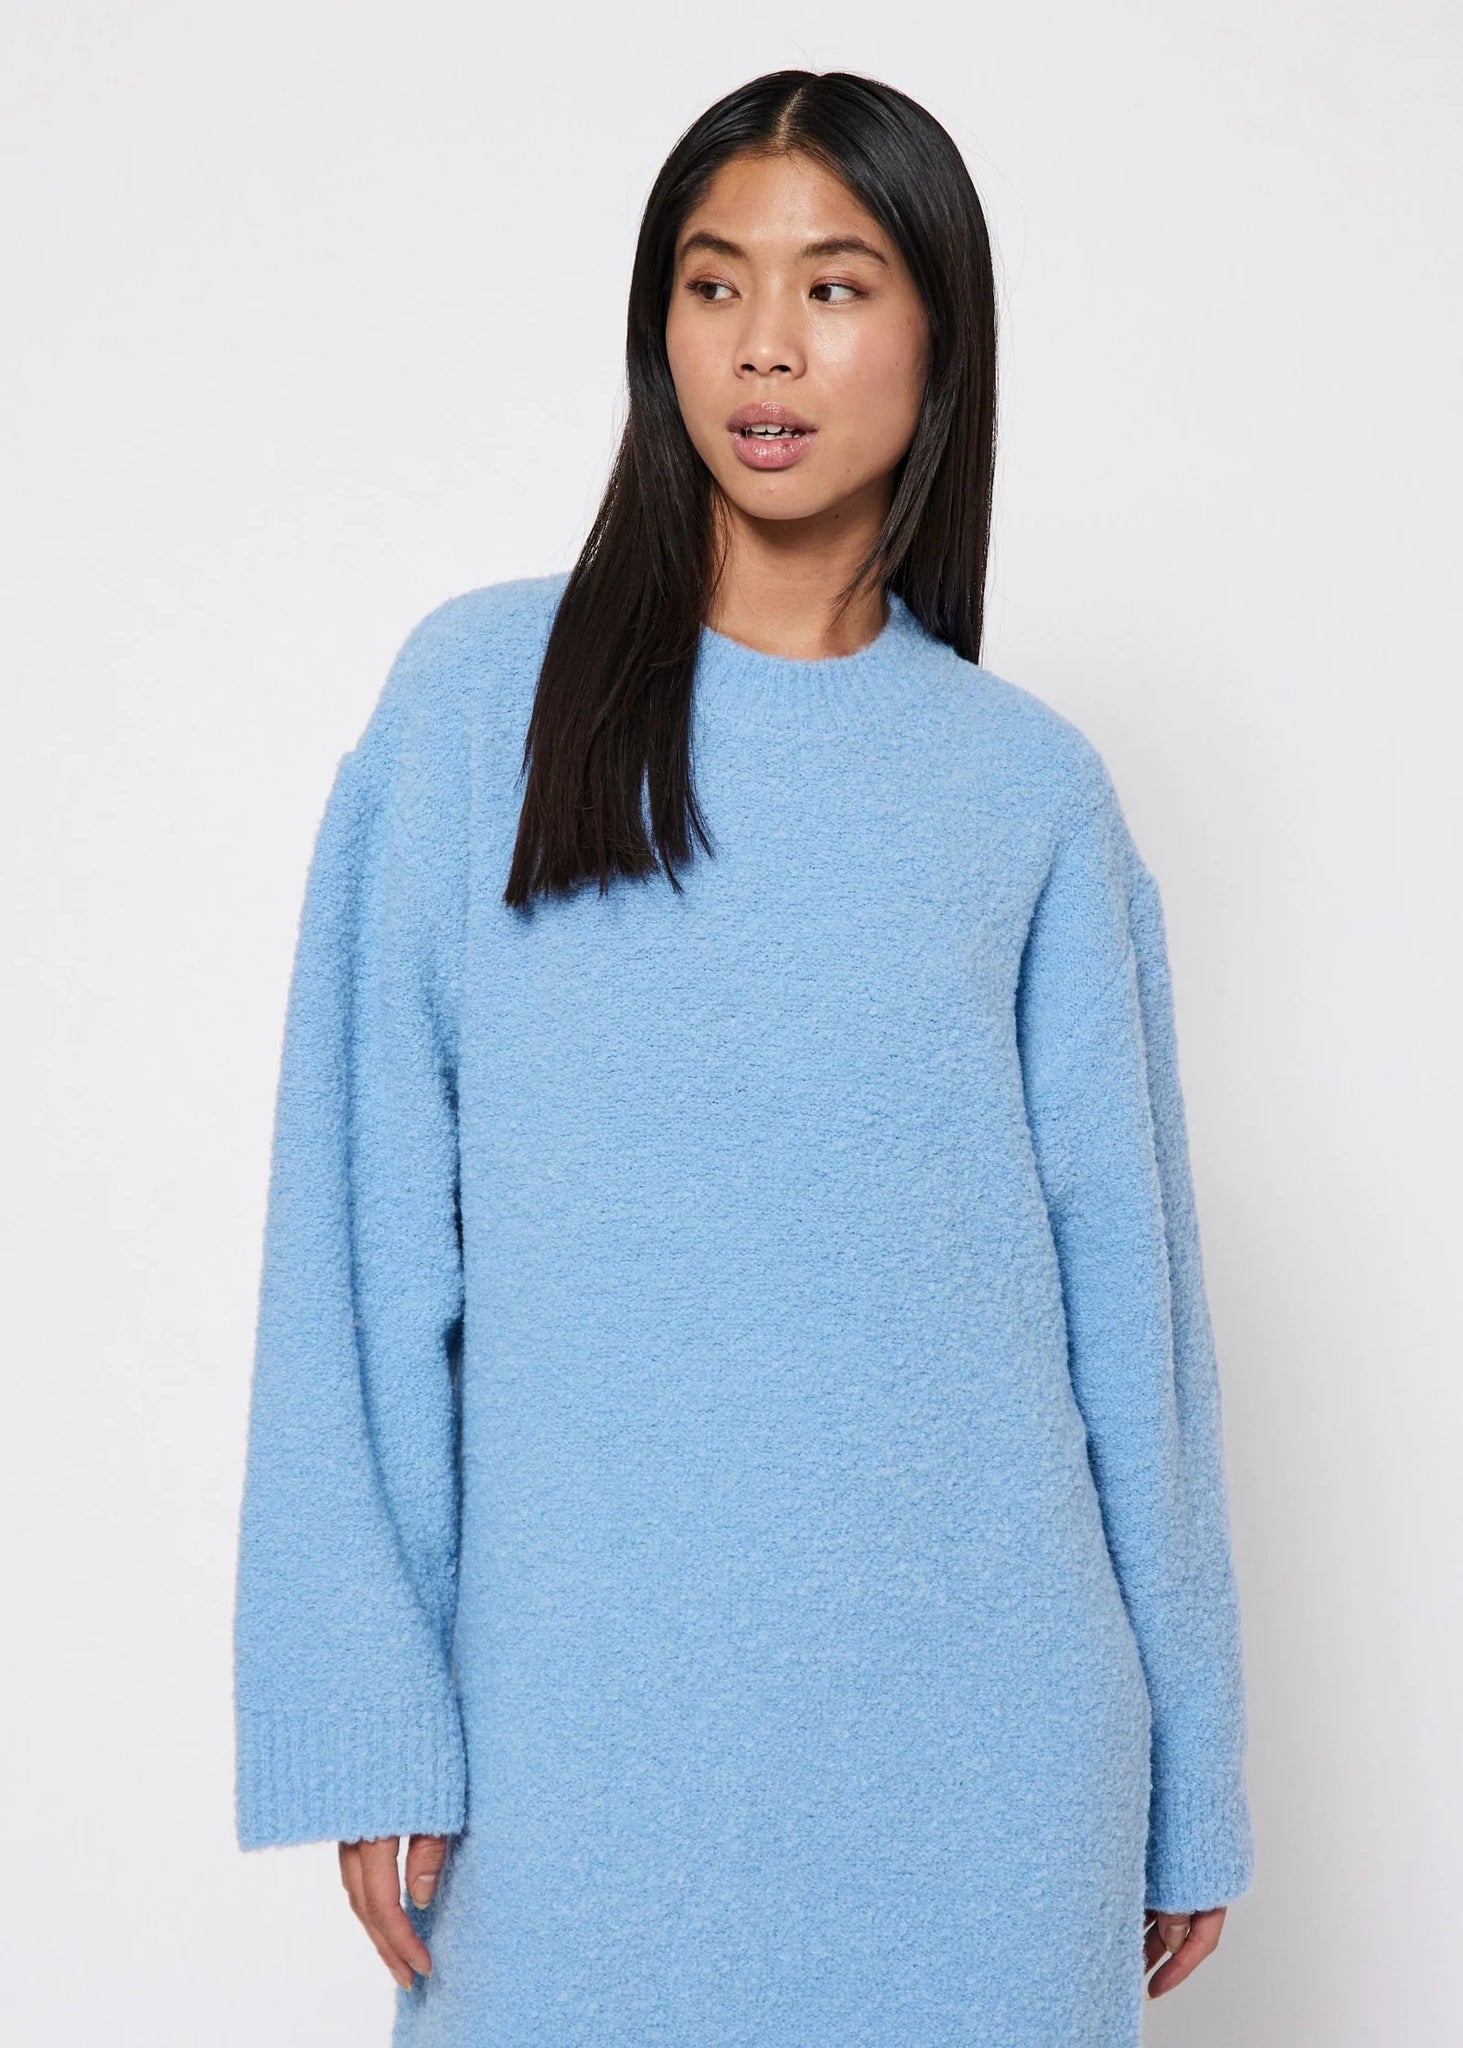 Vica knit dress in light blue